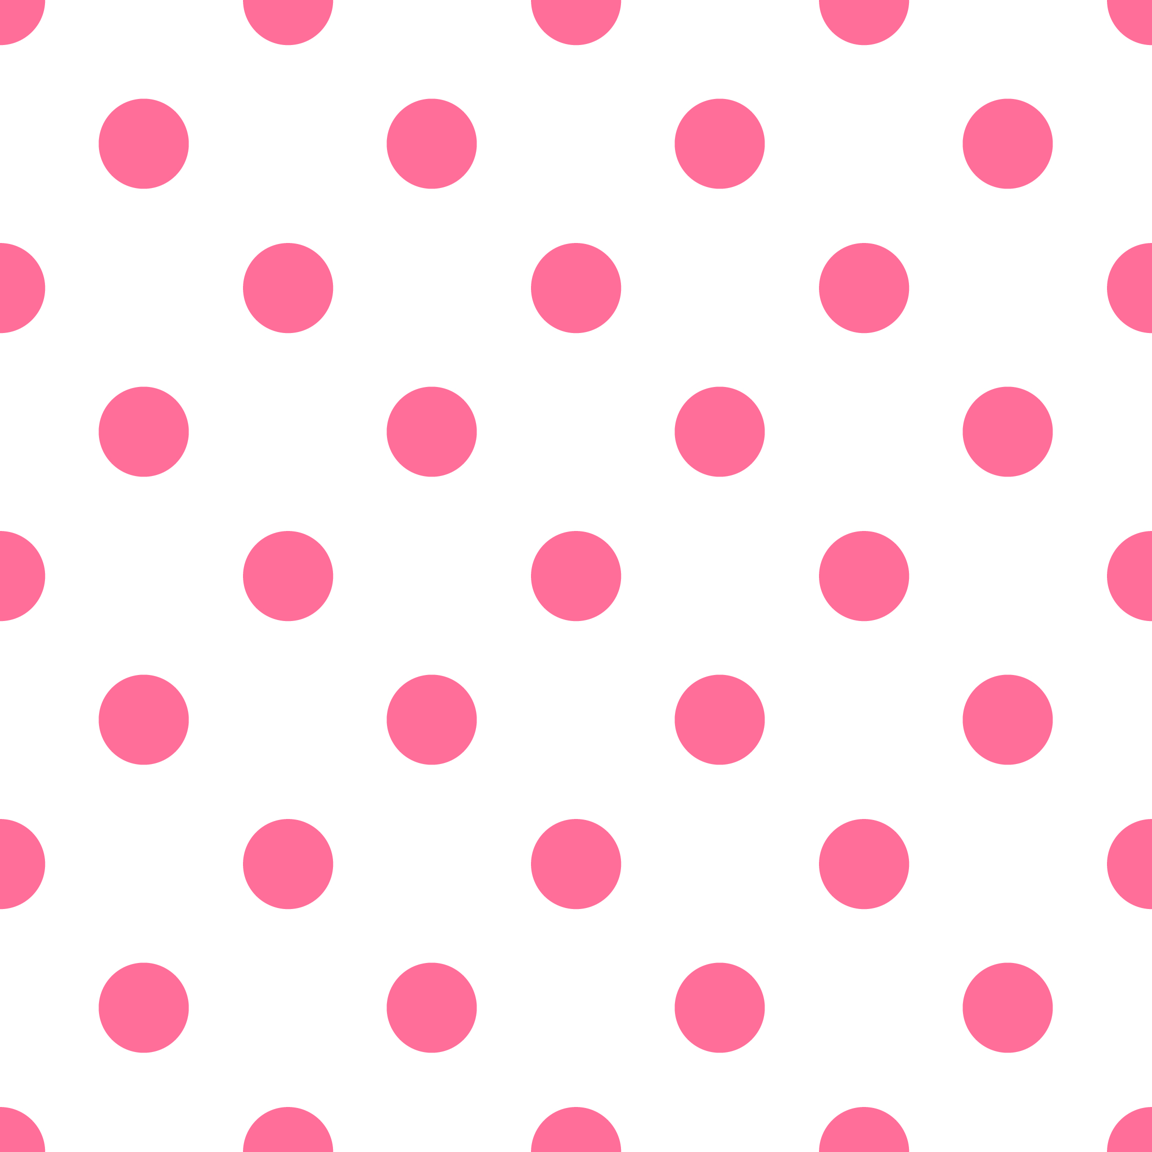 White with Pink Polka Dots wallpaper - nicoledobbins - Spoonflower